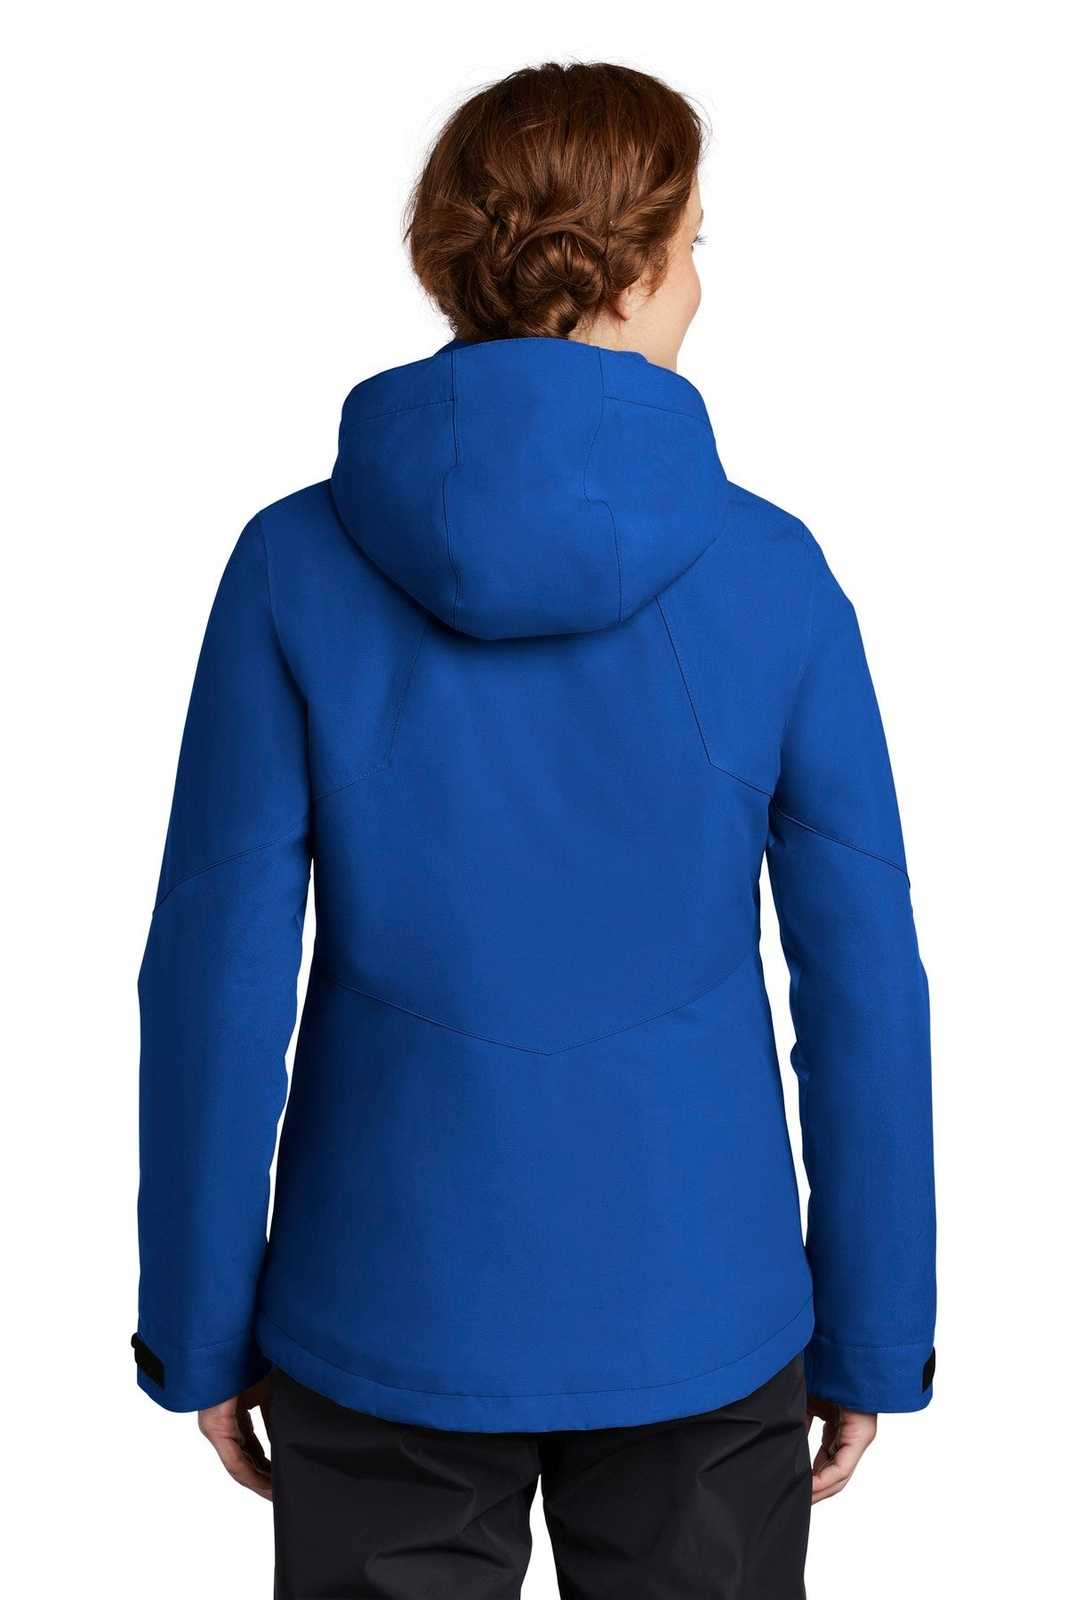 Port Authority L405 Ladies Insulated Waterproof Tech Jacket - Cobalt Blue - HIT a Double - 2